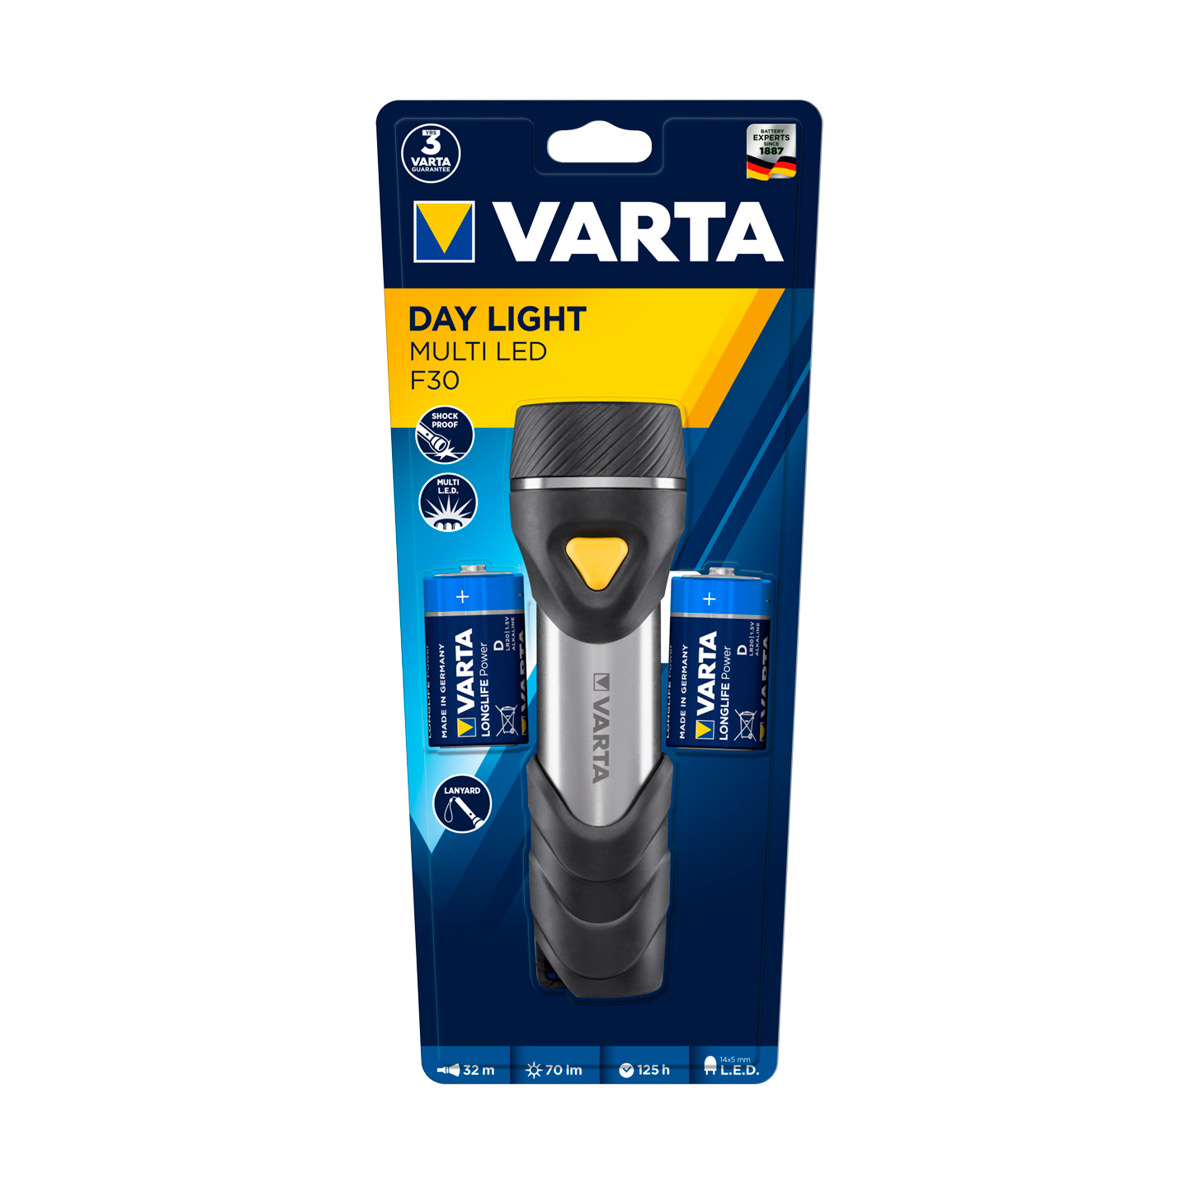 Varta Multi LED F30 Taschenlampe mit 14x LED´s